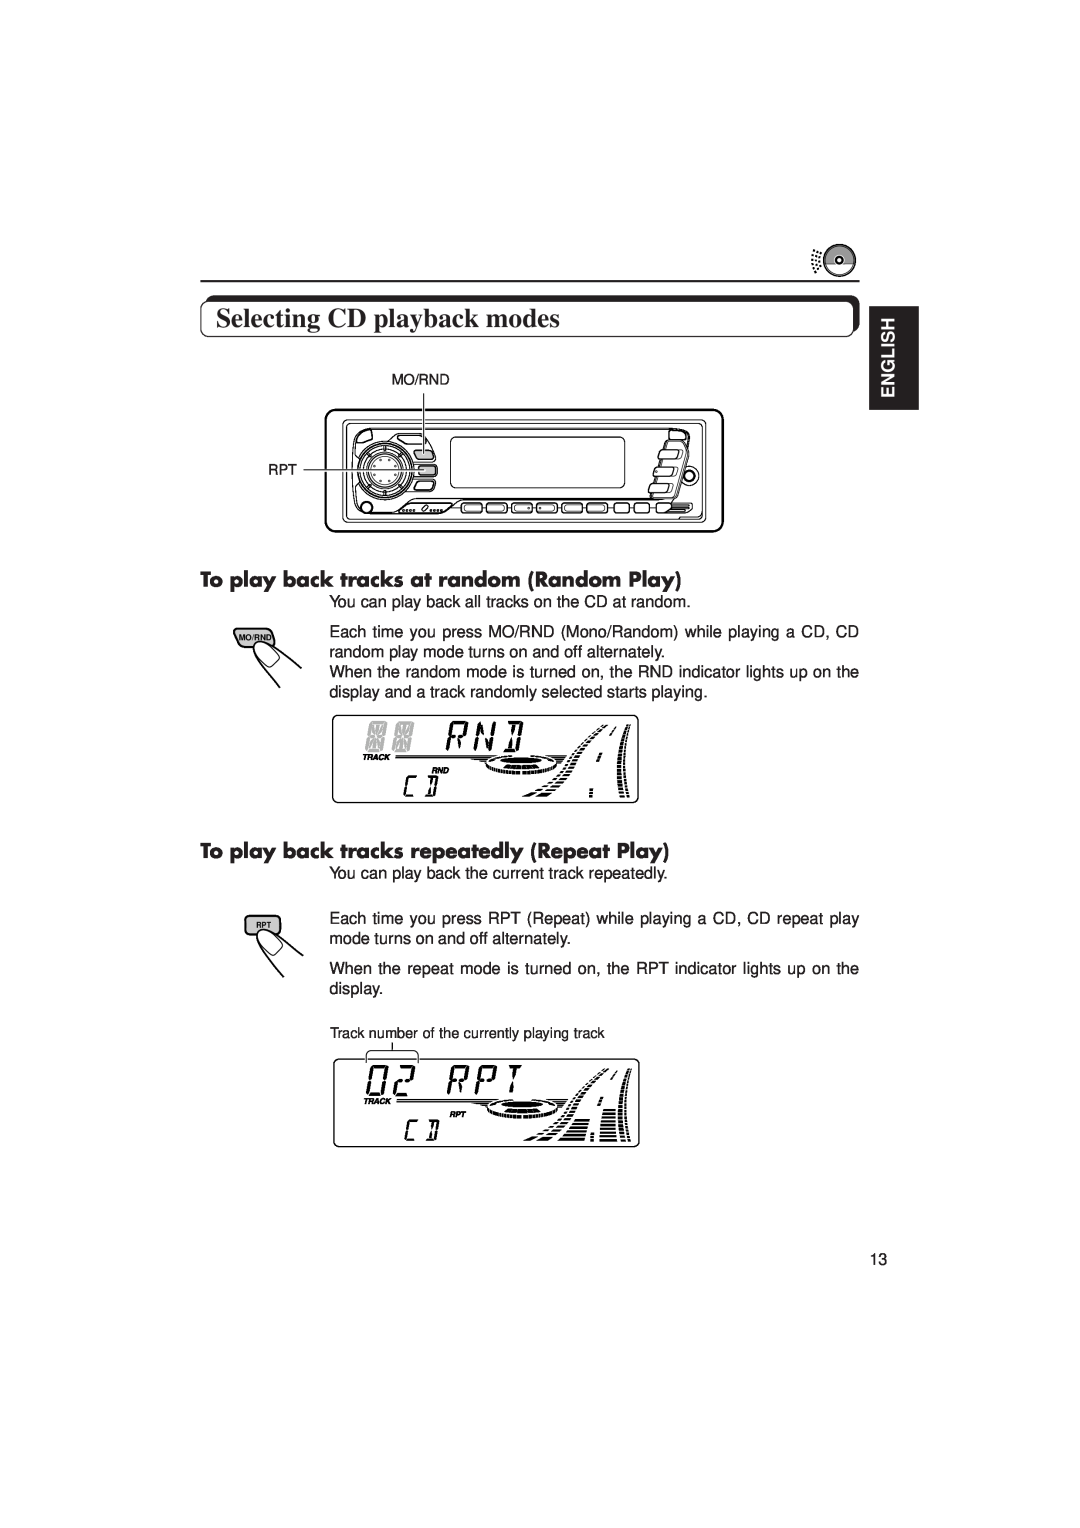 JVC KD-SX940, KD-SX949 manual Selecting CD playback modes, To play back tracks at random Random Play, English 